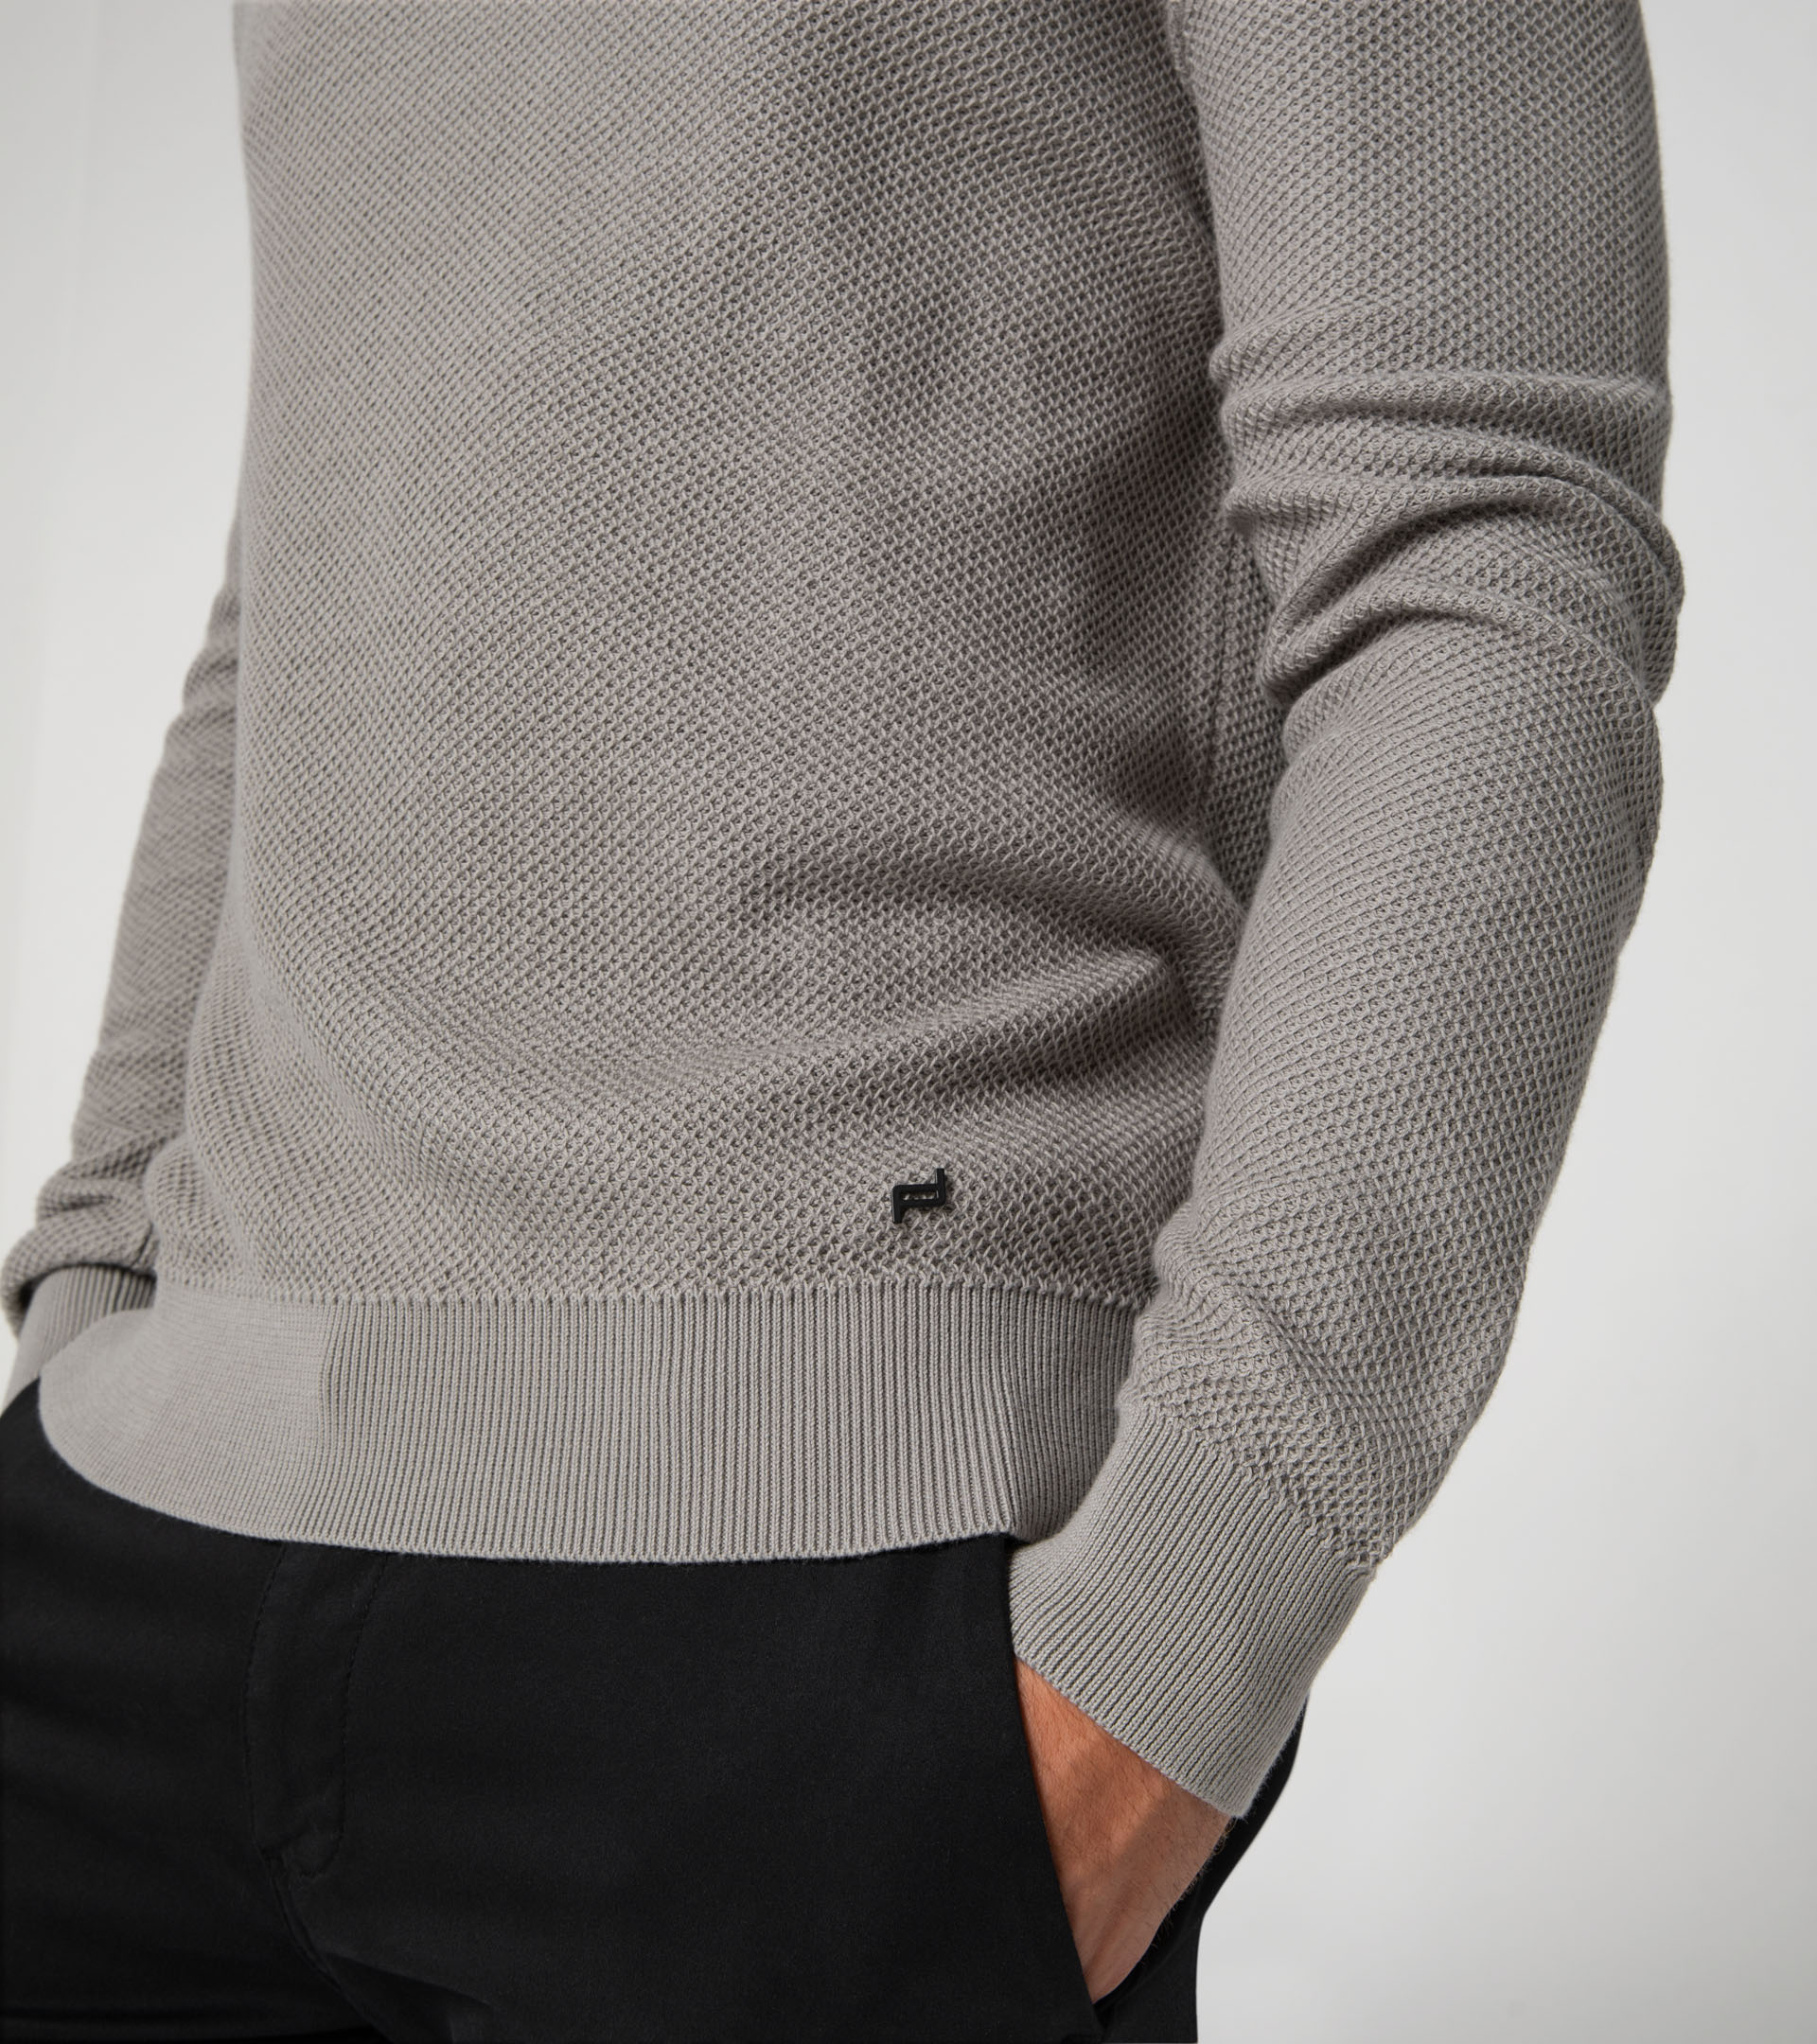 Jacquard sweater - Designer Sweaters for Men | Porsche Design | Porsche ...